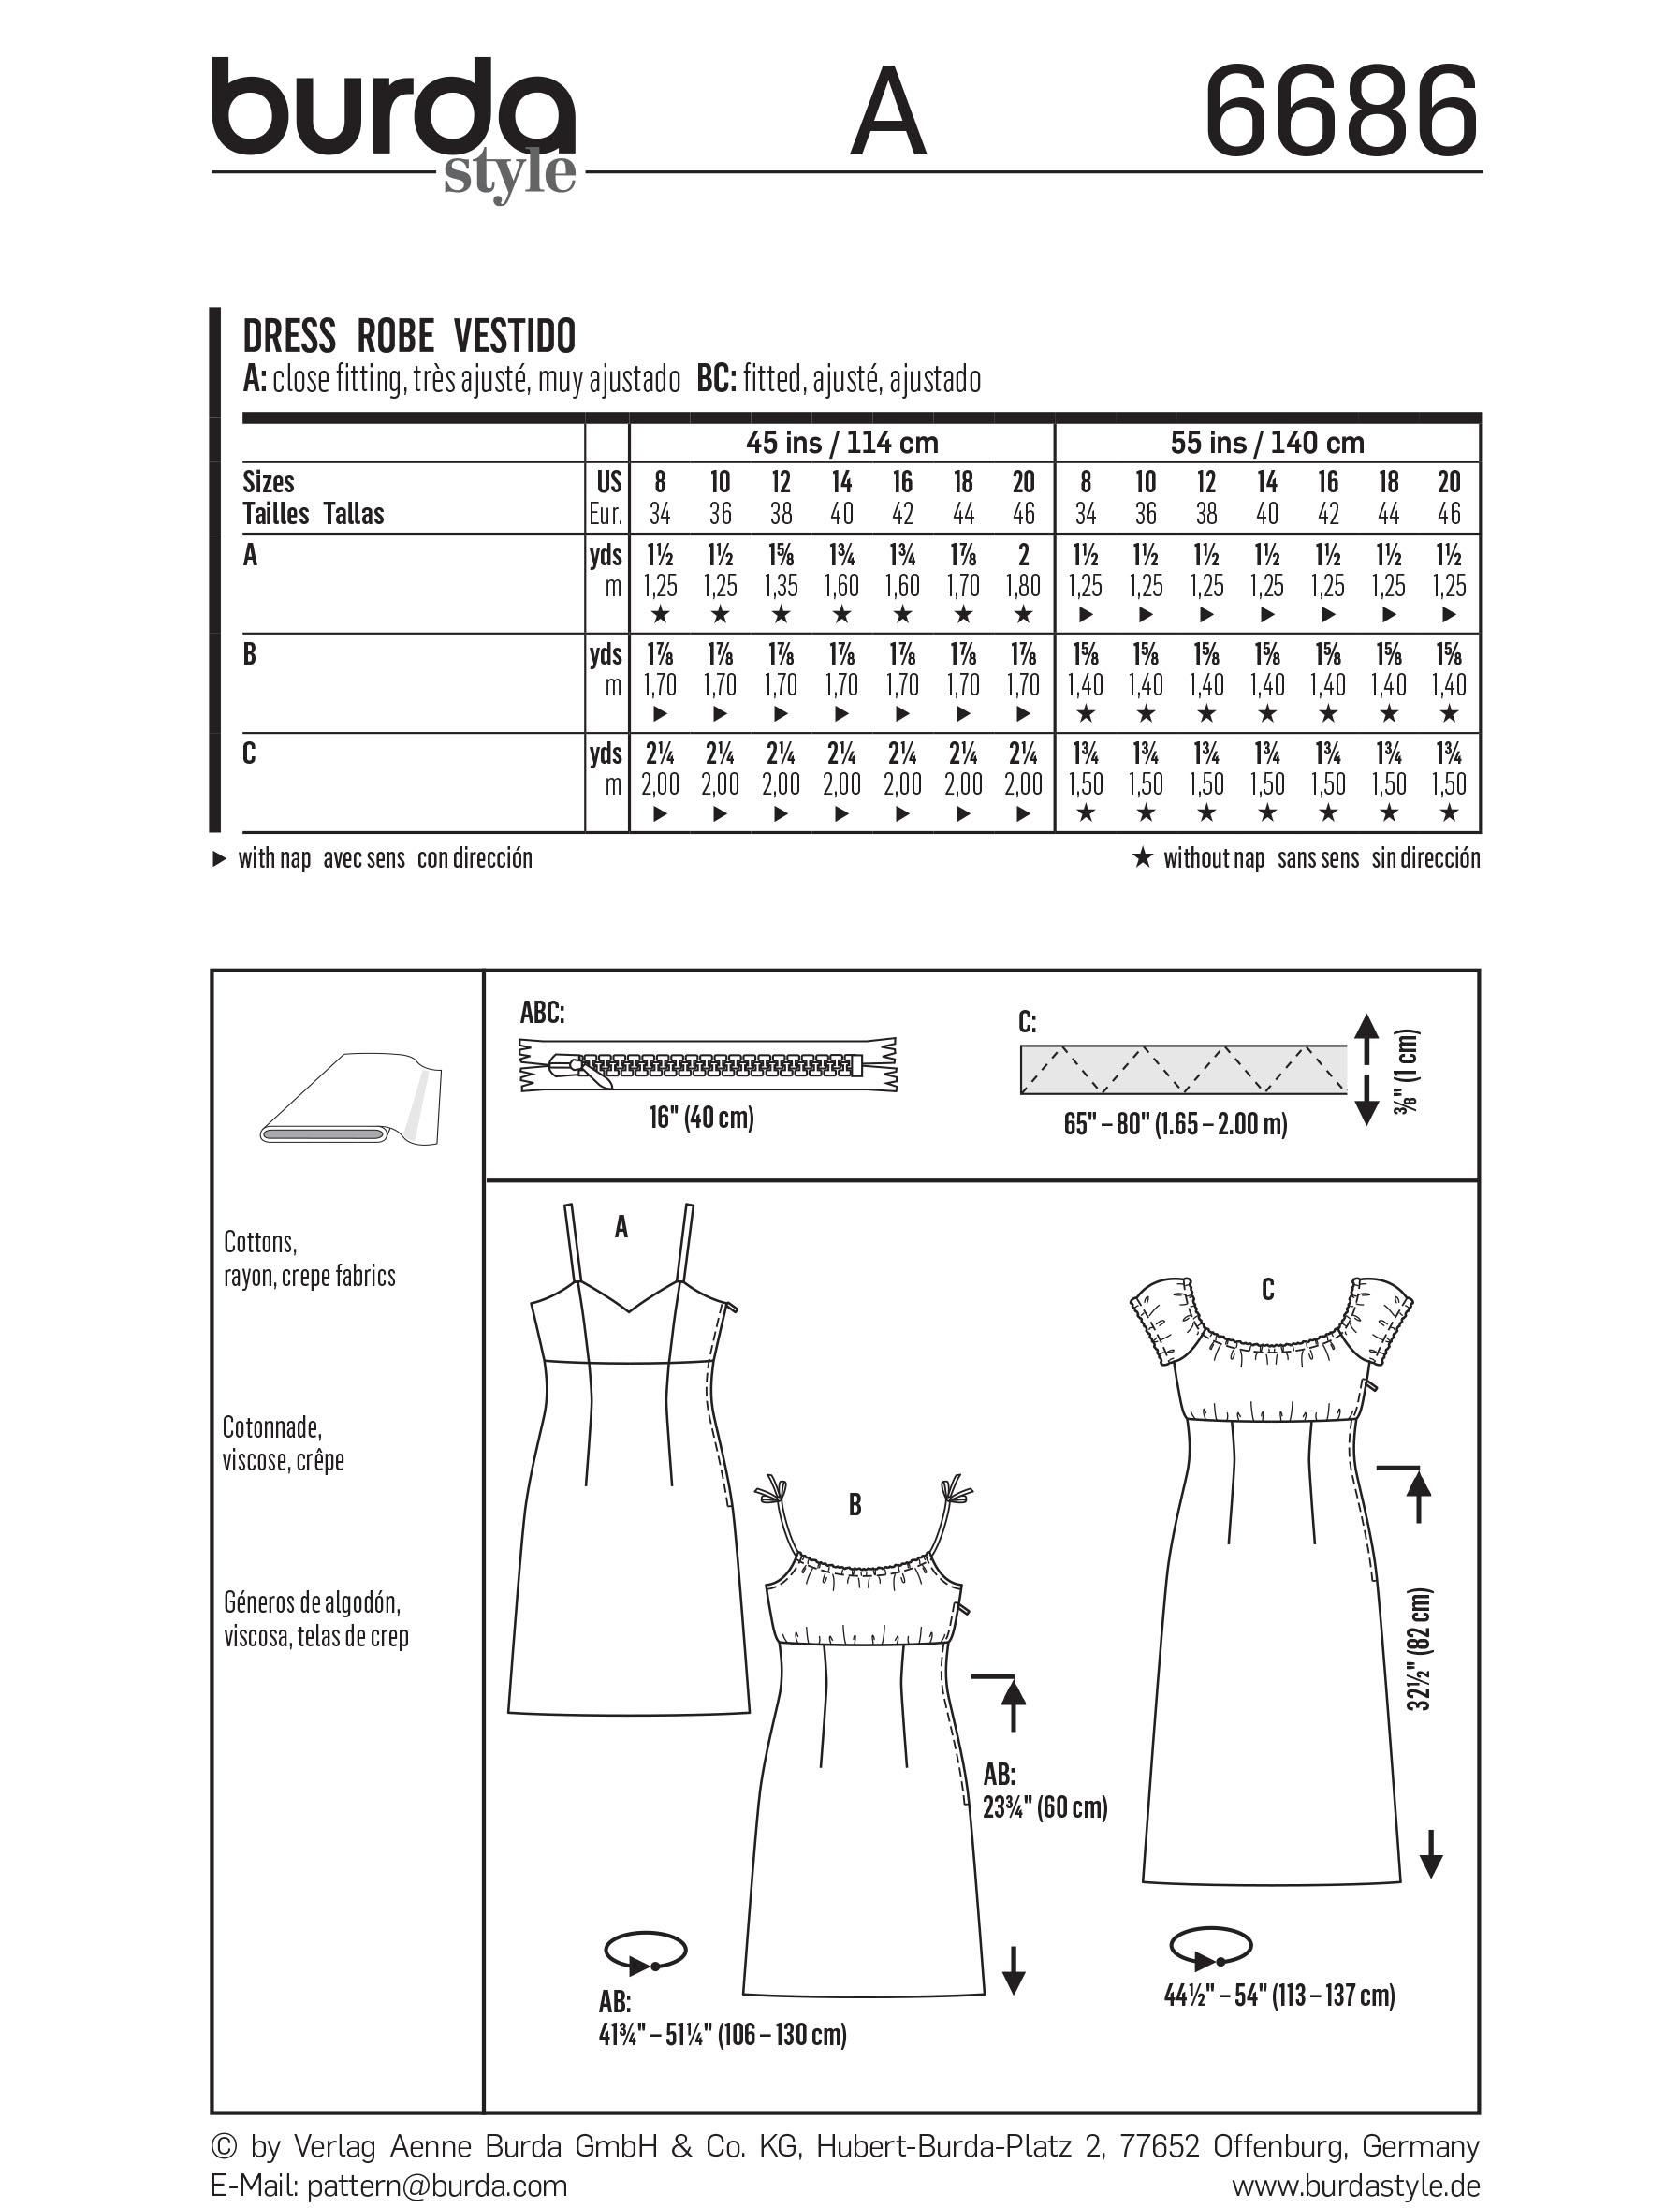 Burda B6686 Women's Dress Sewing Pattern